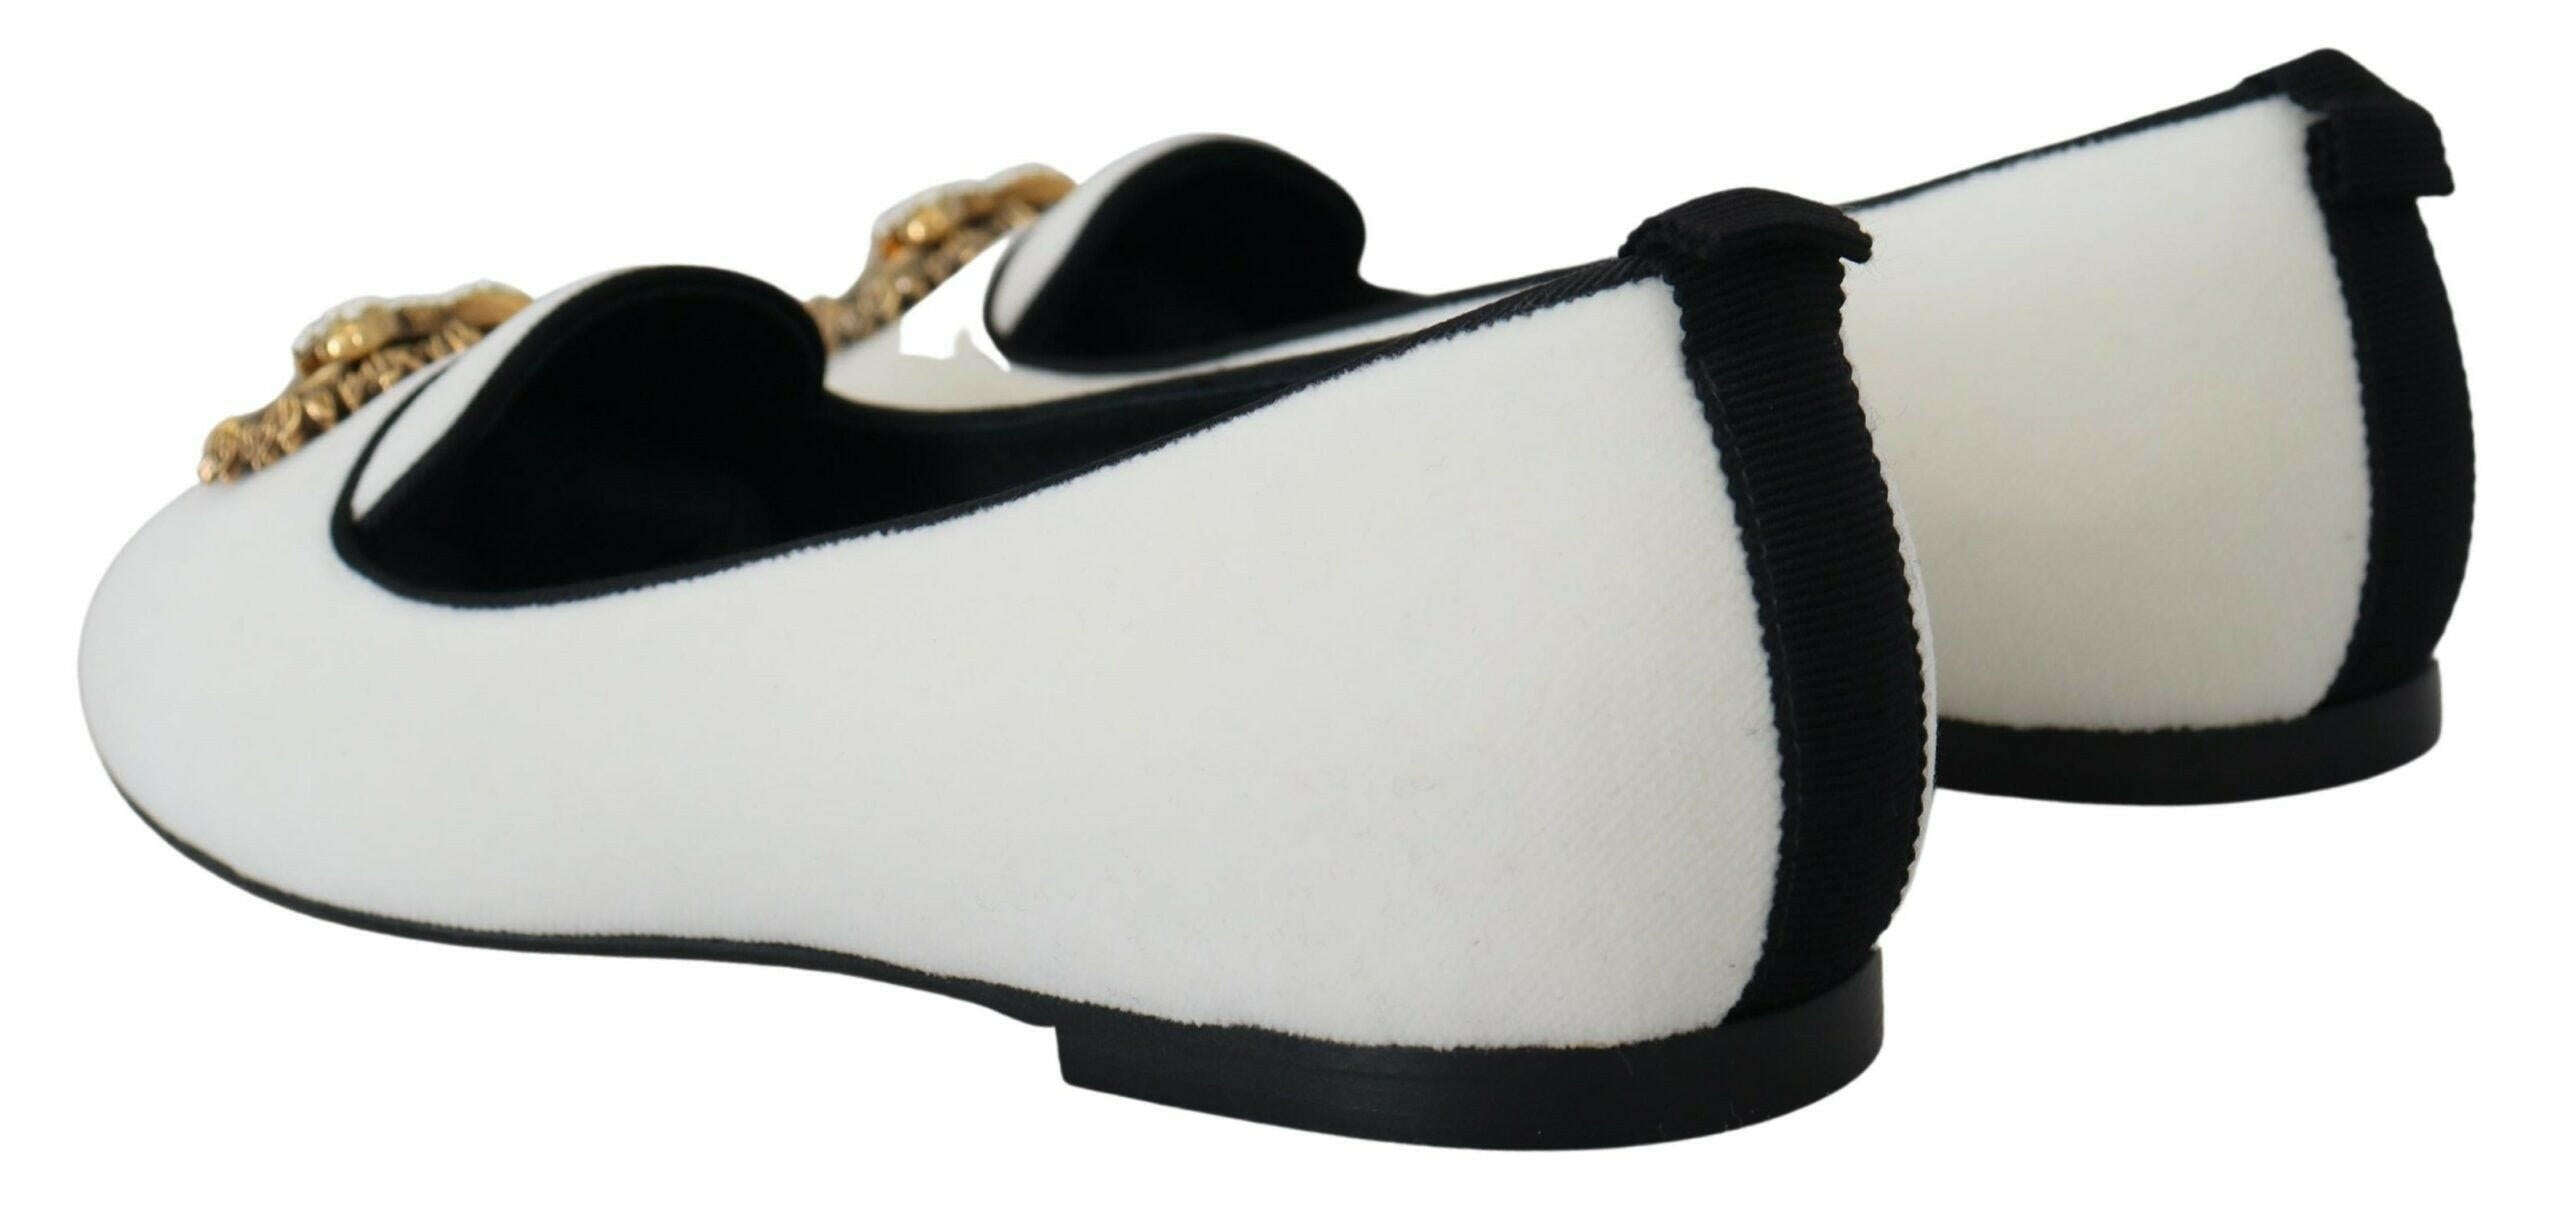 Dolce & Gabbana White Velvet Slip Ons Loafers Flats Shoes - GENUINE AUTHENTIC BRAND LLC  